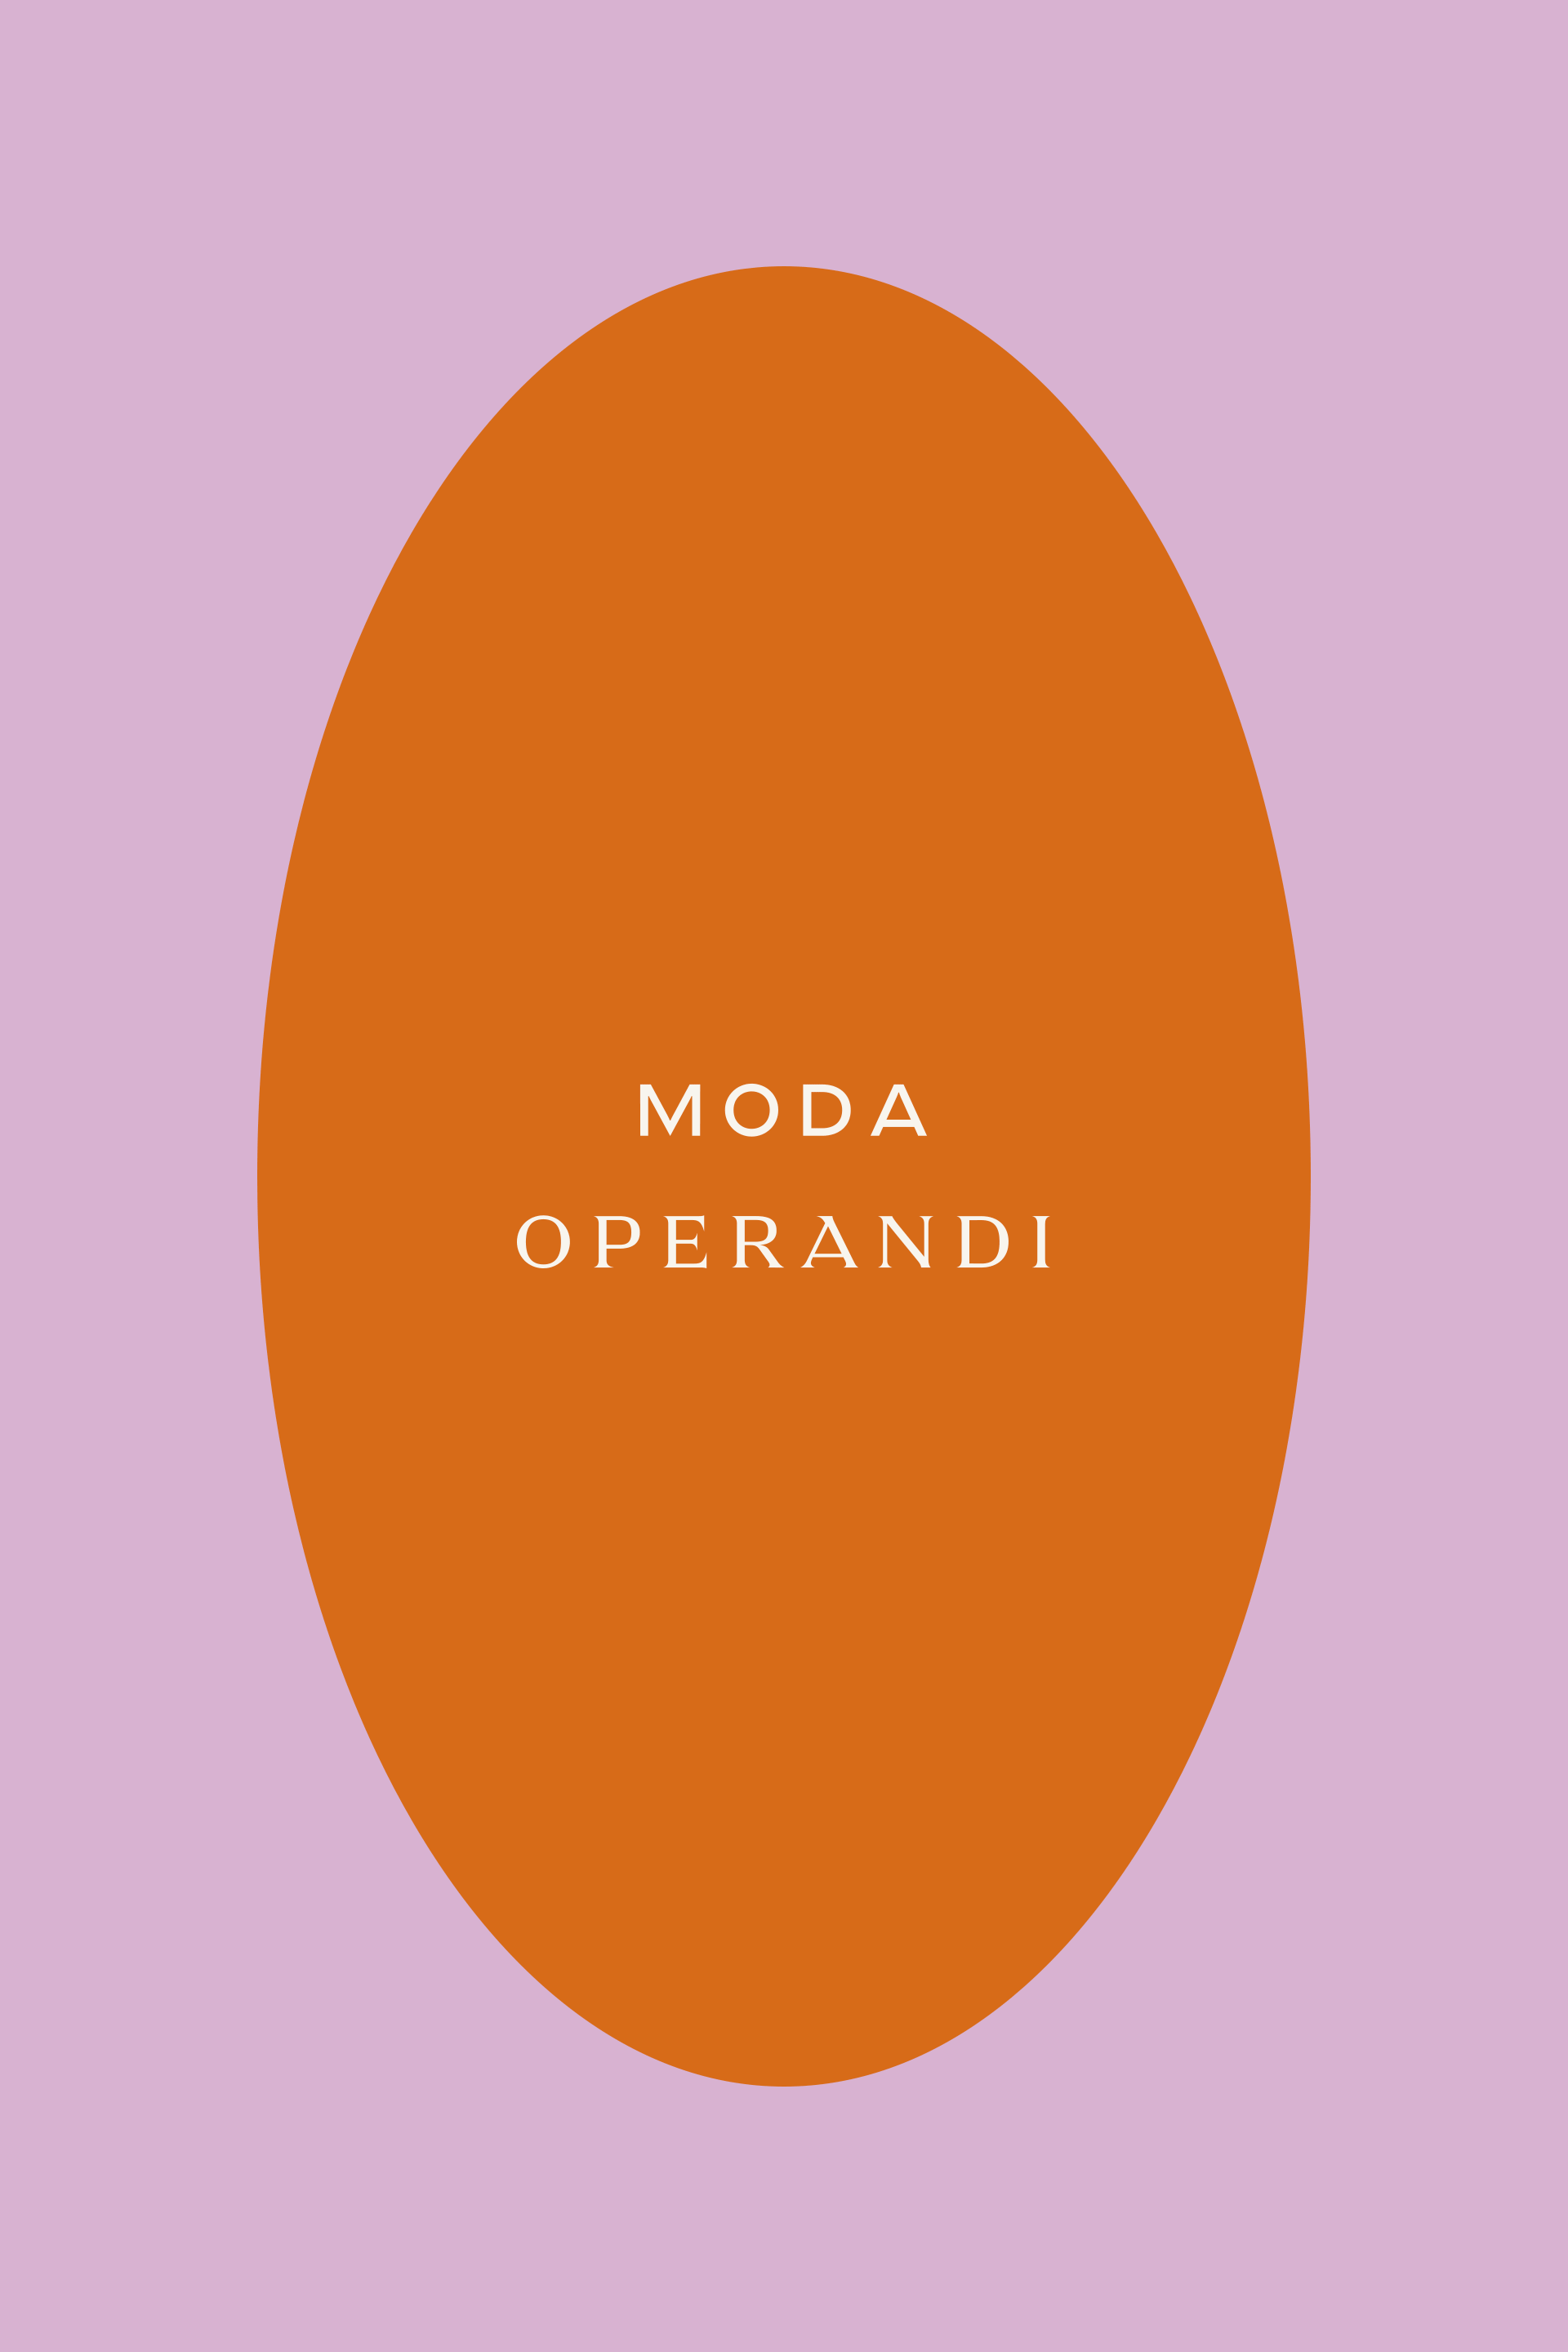 New Logo and Identity for Moda Operandi by Lotta Nieminen